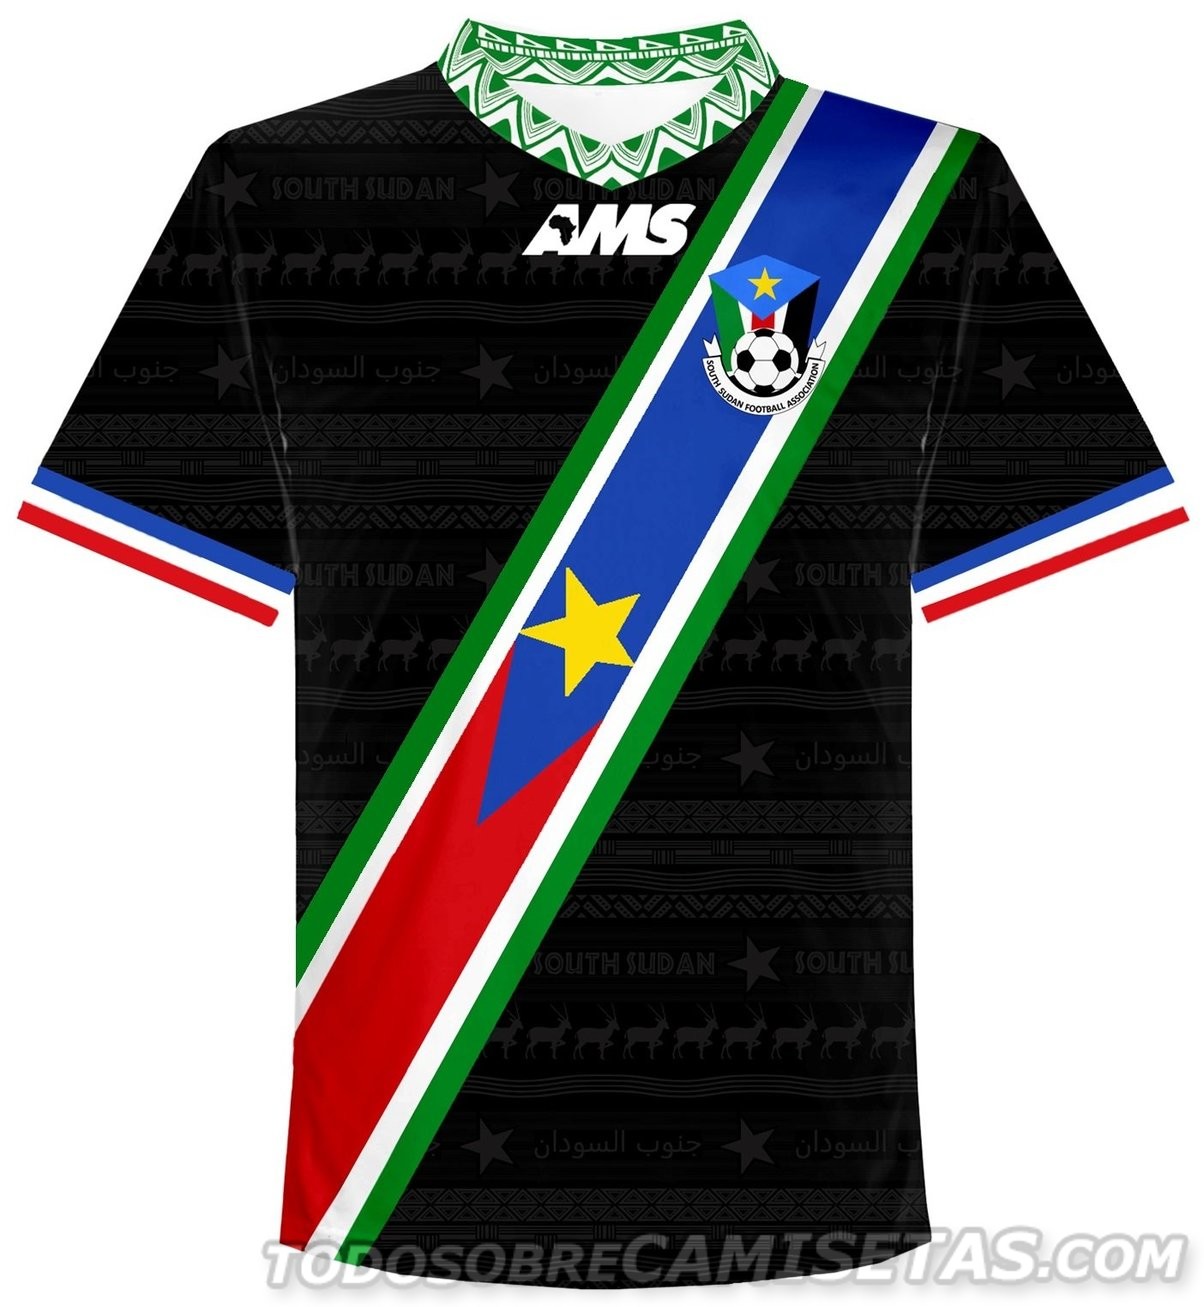 South Sudan 2017-18 AMS Kits